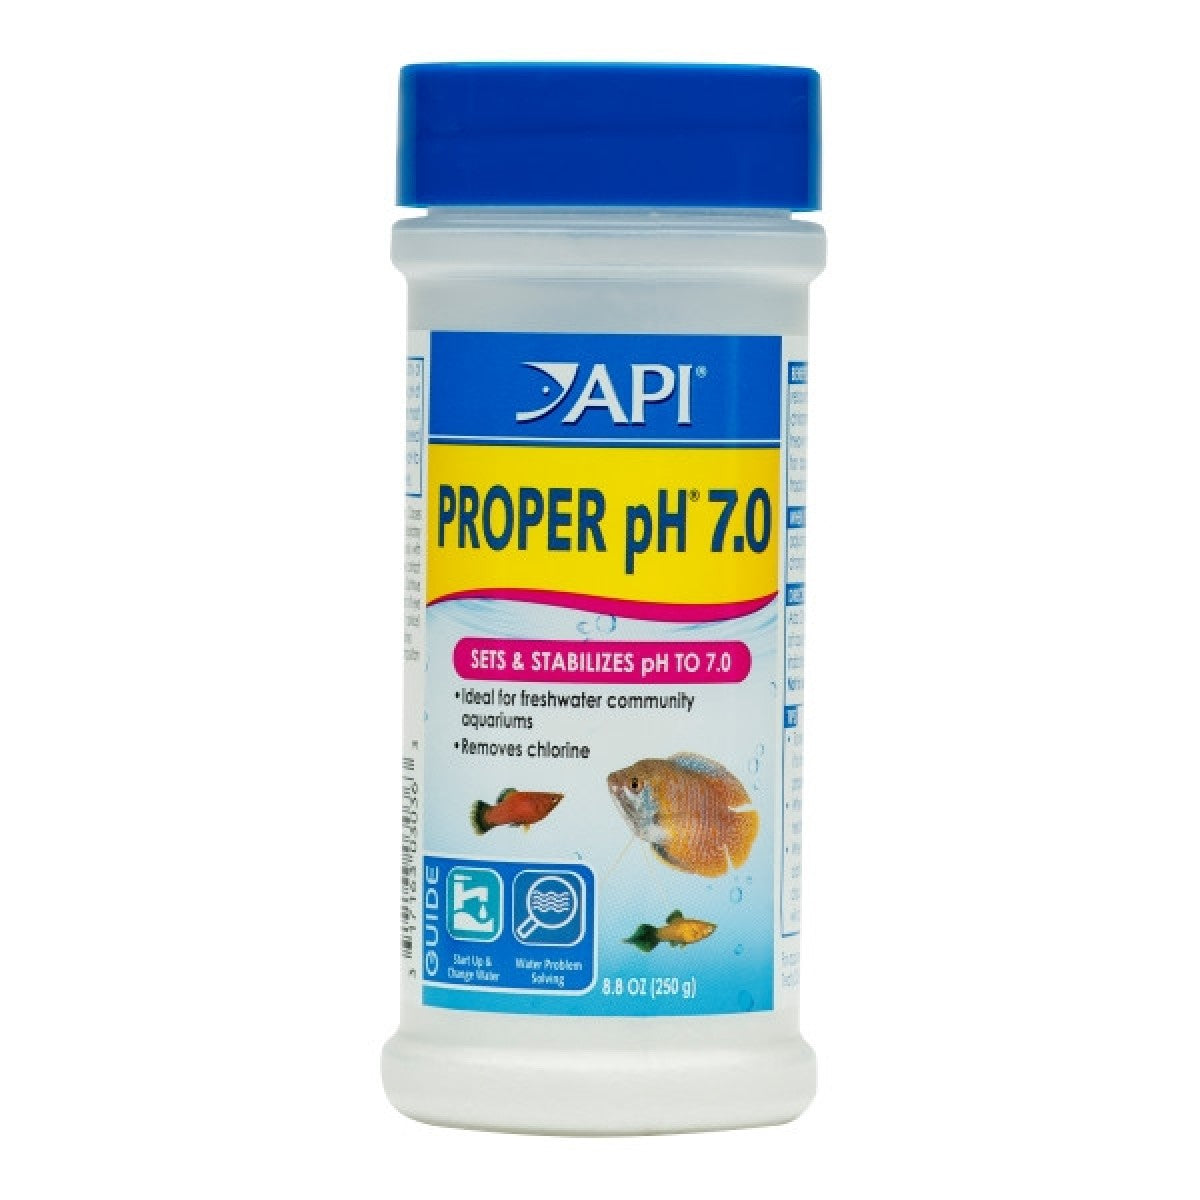 API Proper pH 7.0 Powder, 8.8 OZ